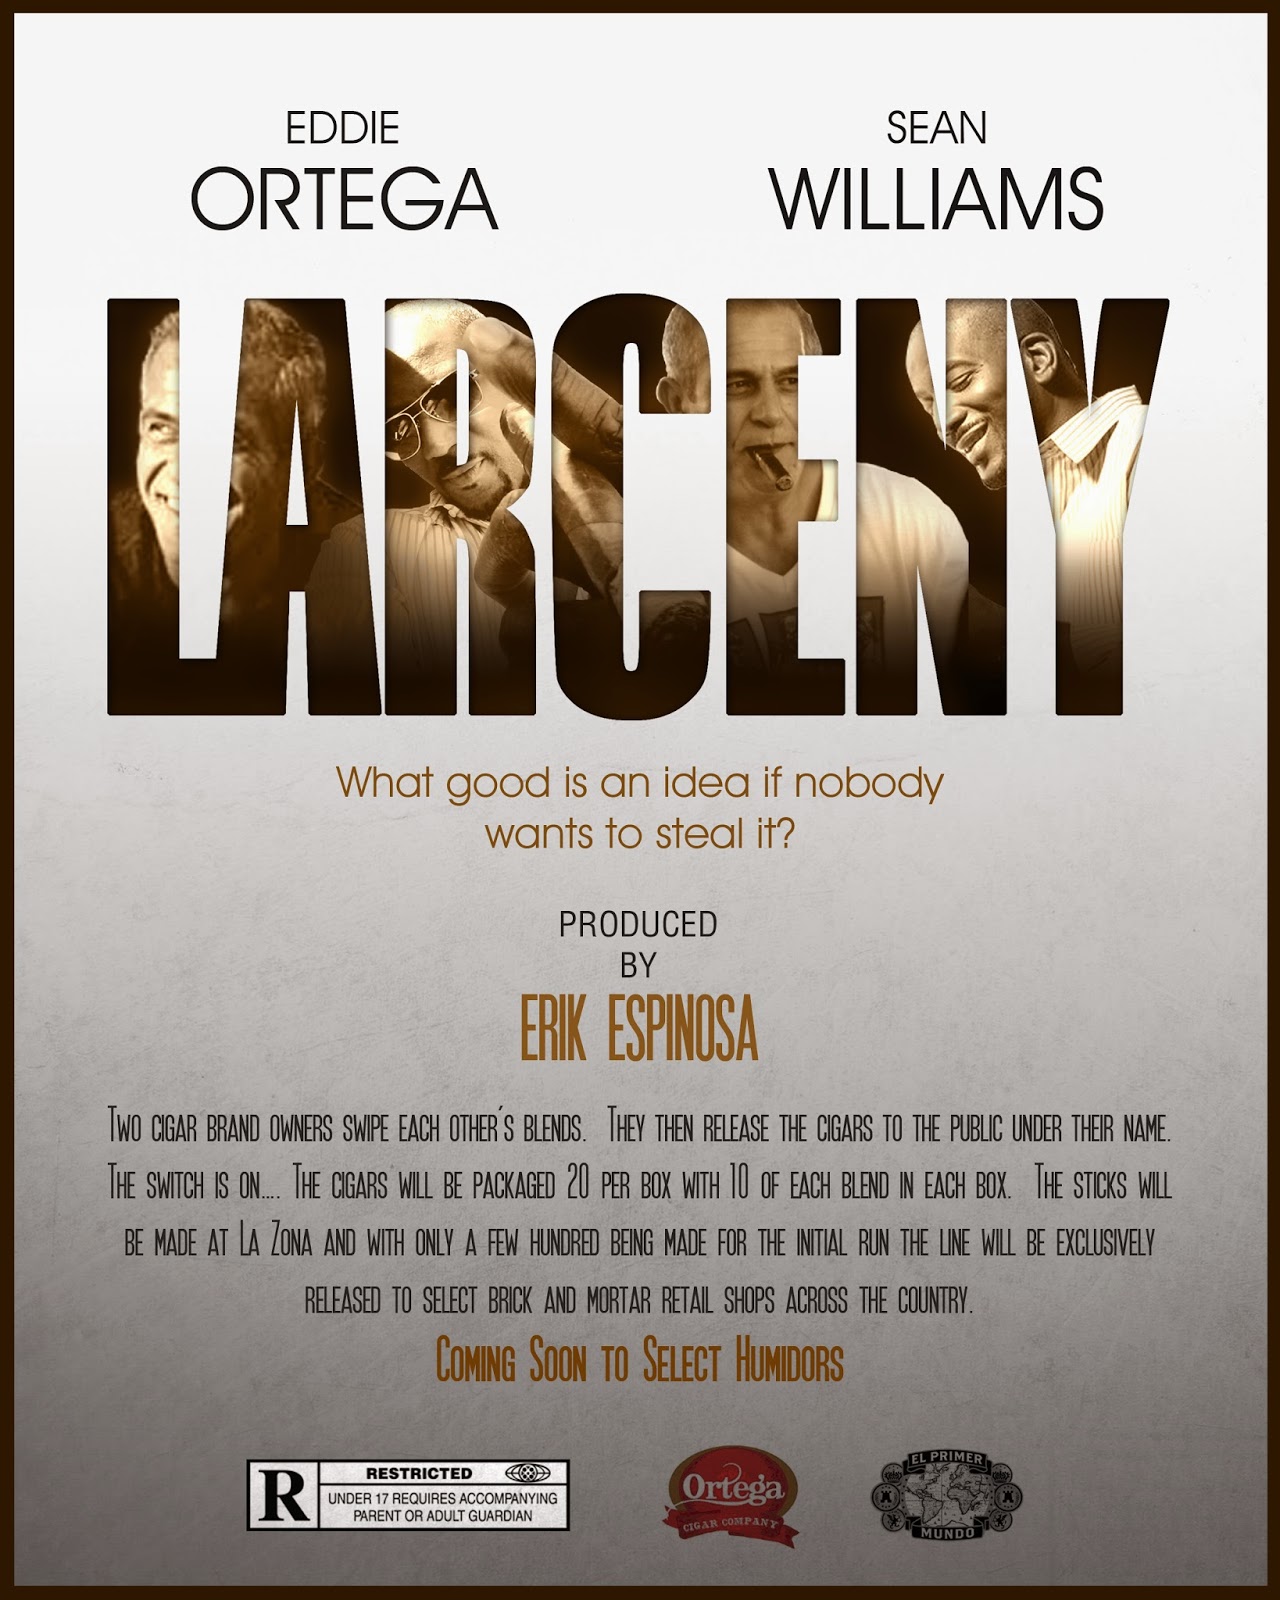 Feature Story: Ortega and Williams Discuss Larceny